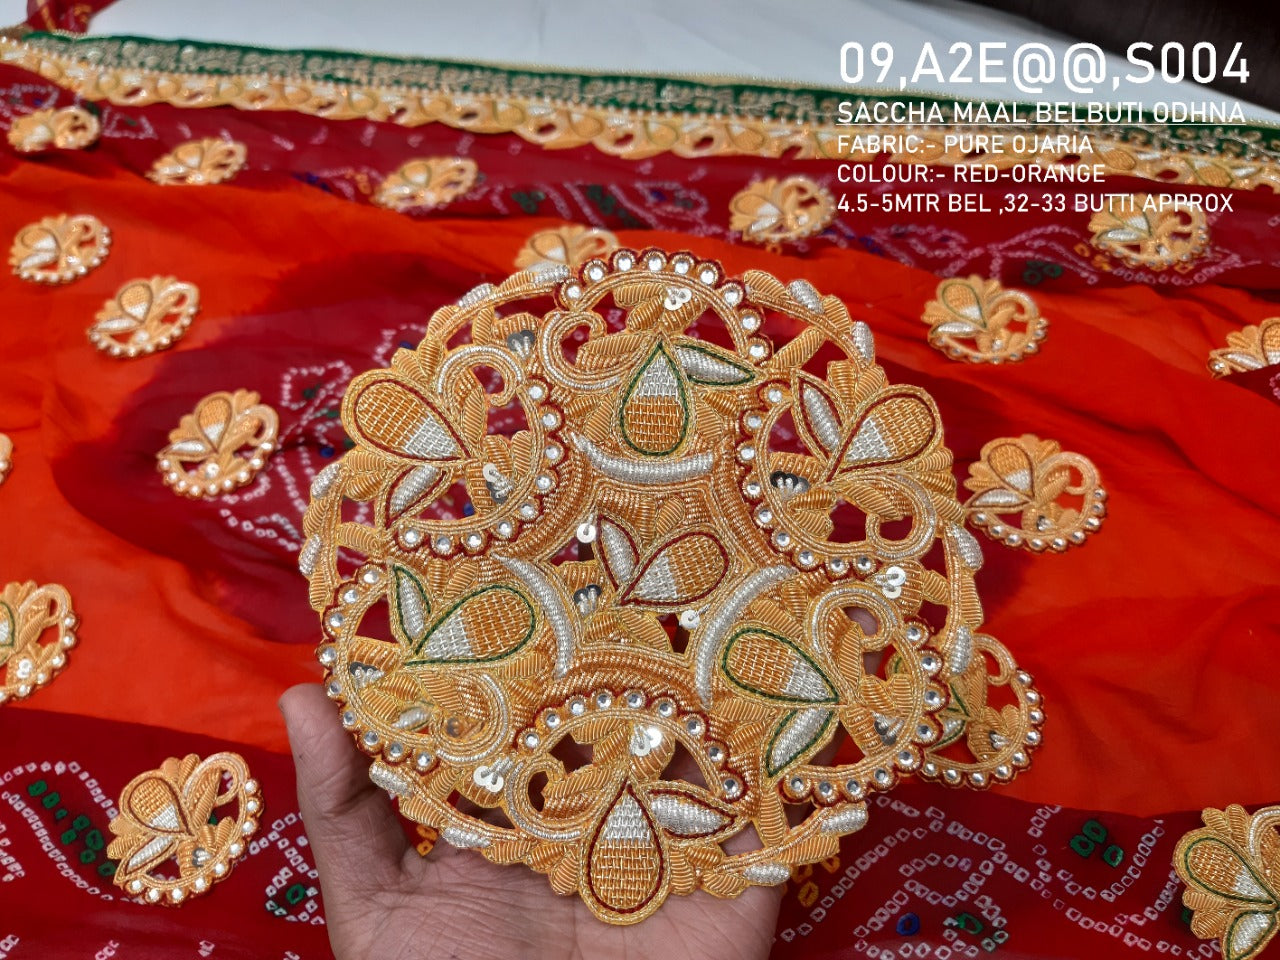 Rajasthani Gota Design With Spiral Round Bangle Big Kada For Ladies/Girls  at Rs 2099.00 | New Delhi| ID: 2851614431462